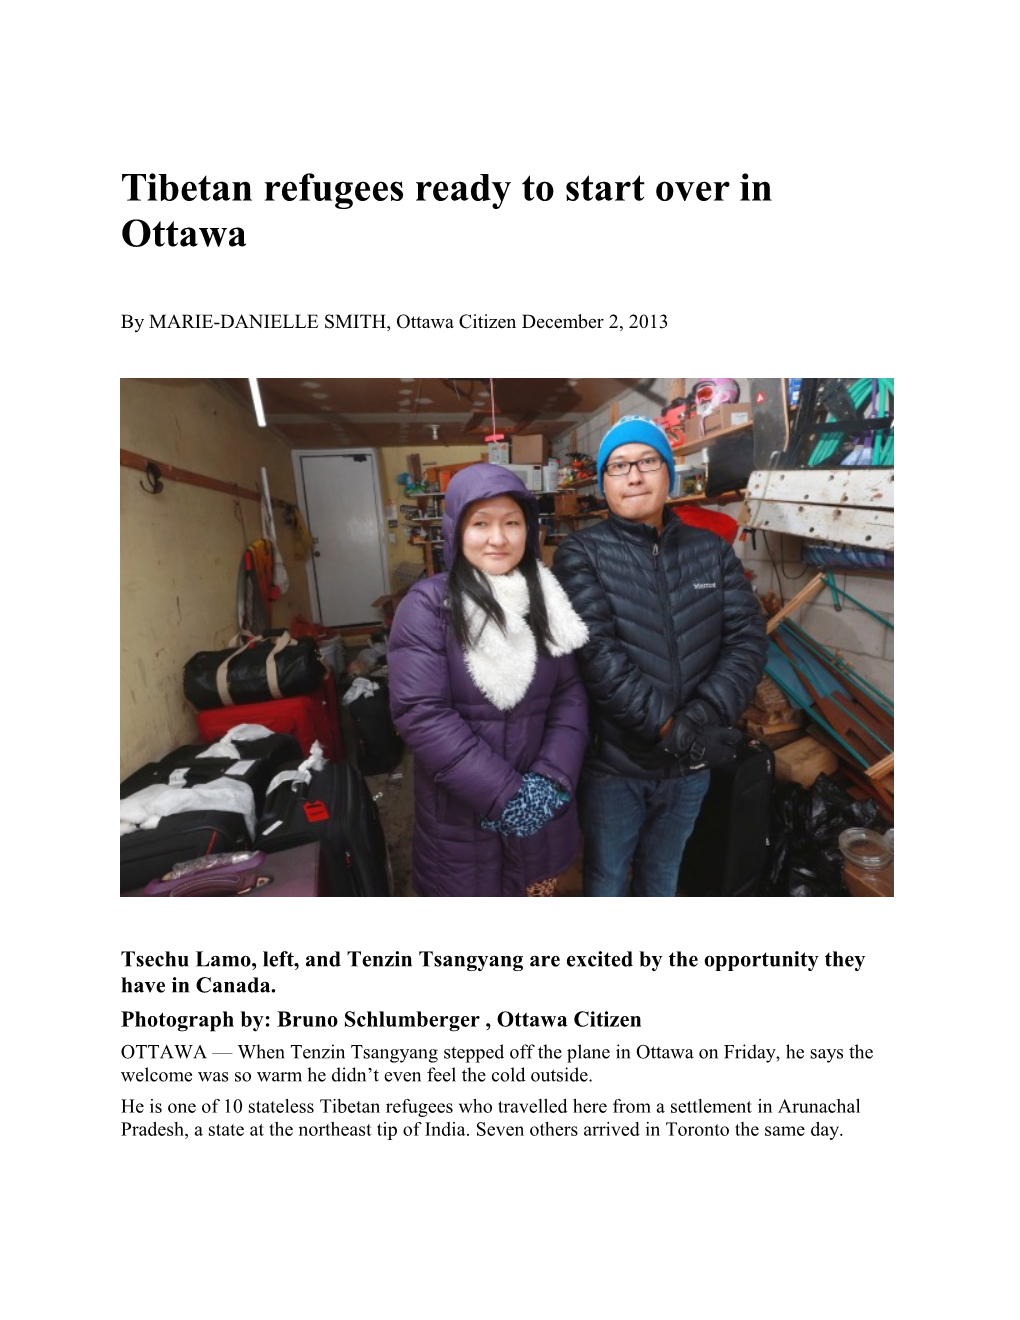 Tibetan Refugees Ready to Start Over in Ottawa